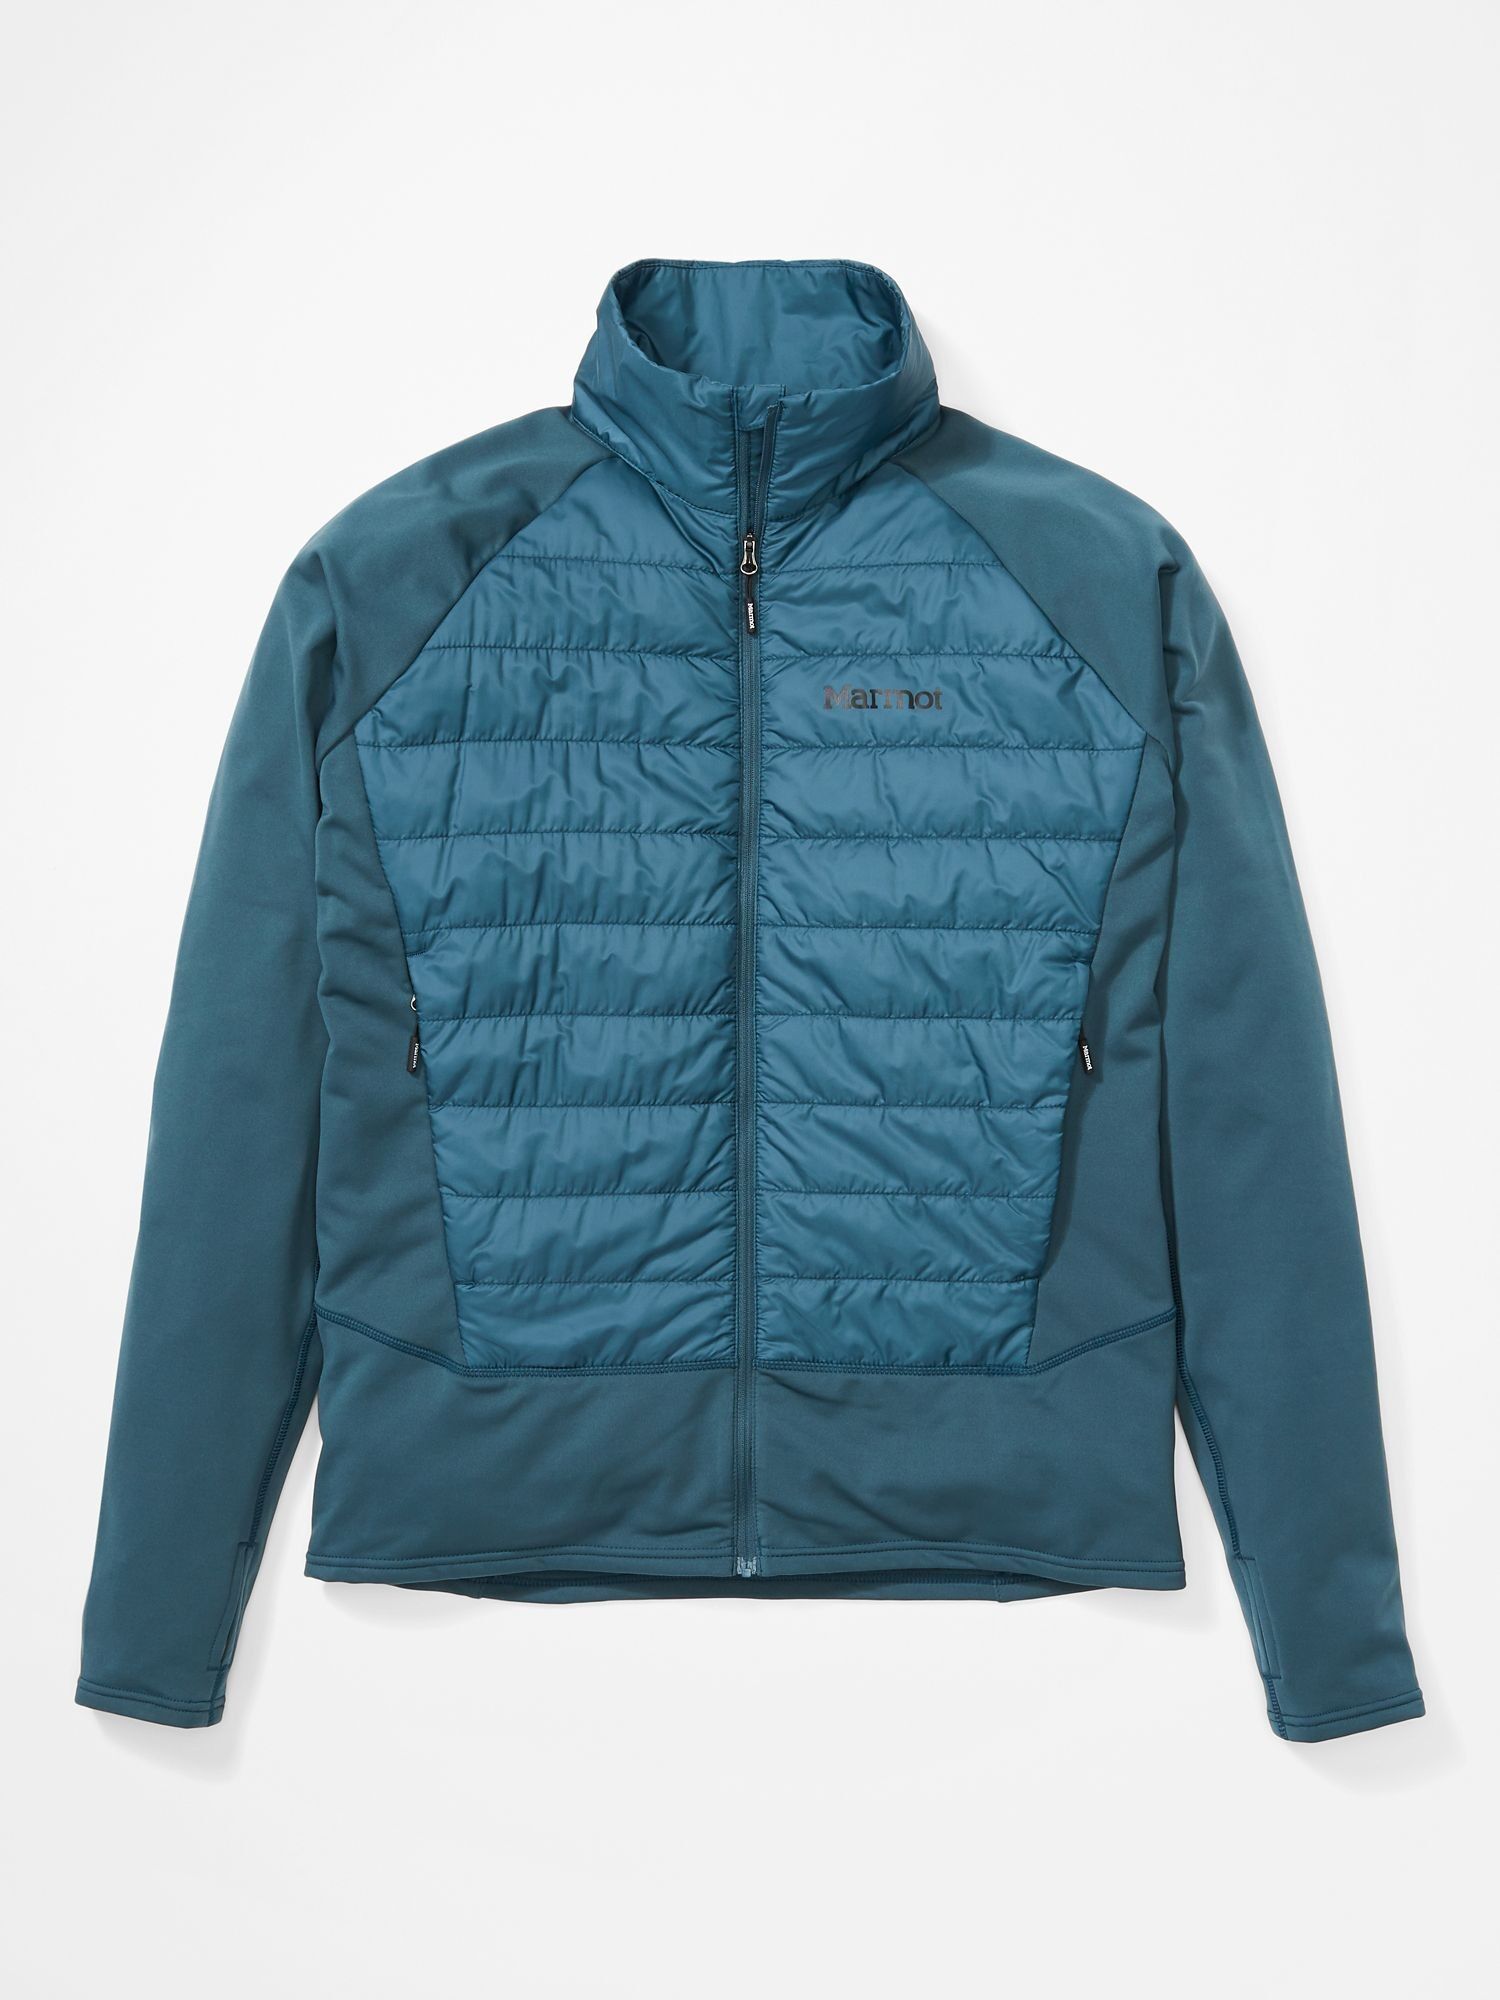 Marmot Variant Hybrid Jacket - Softshell jacket - Men's